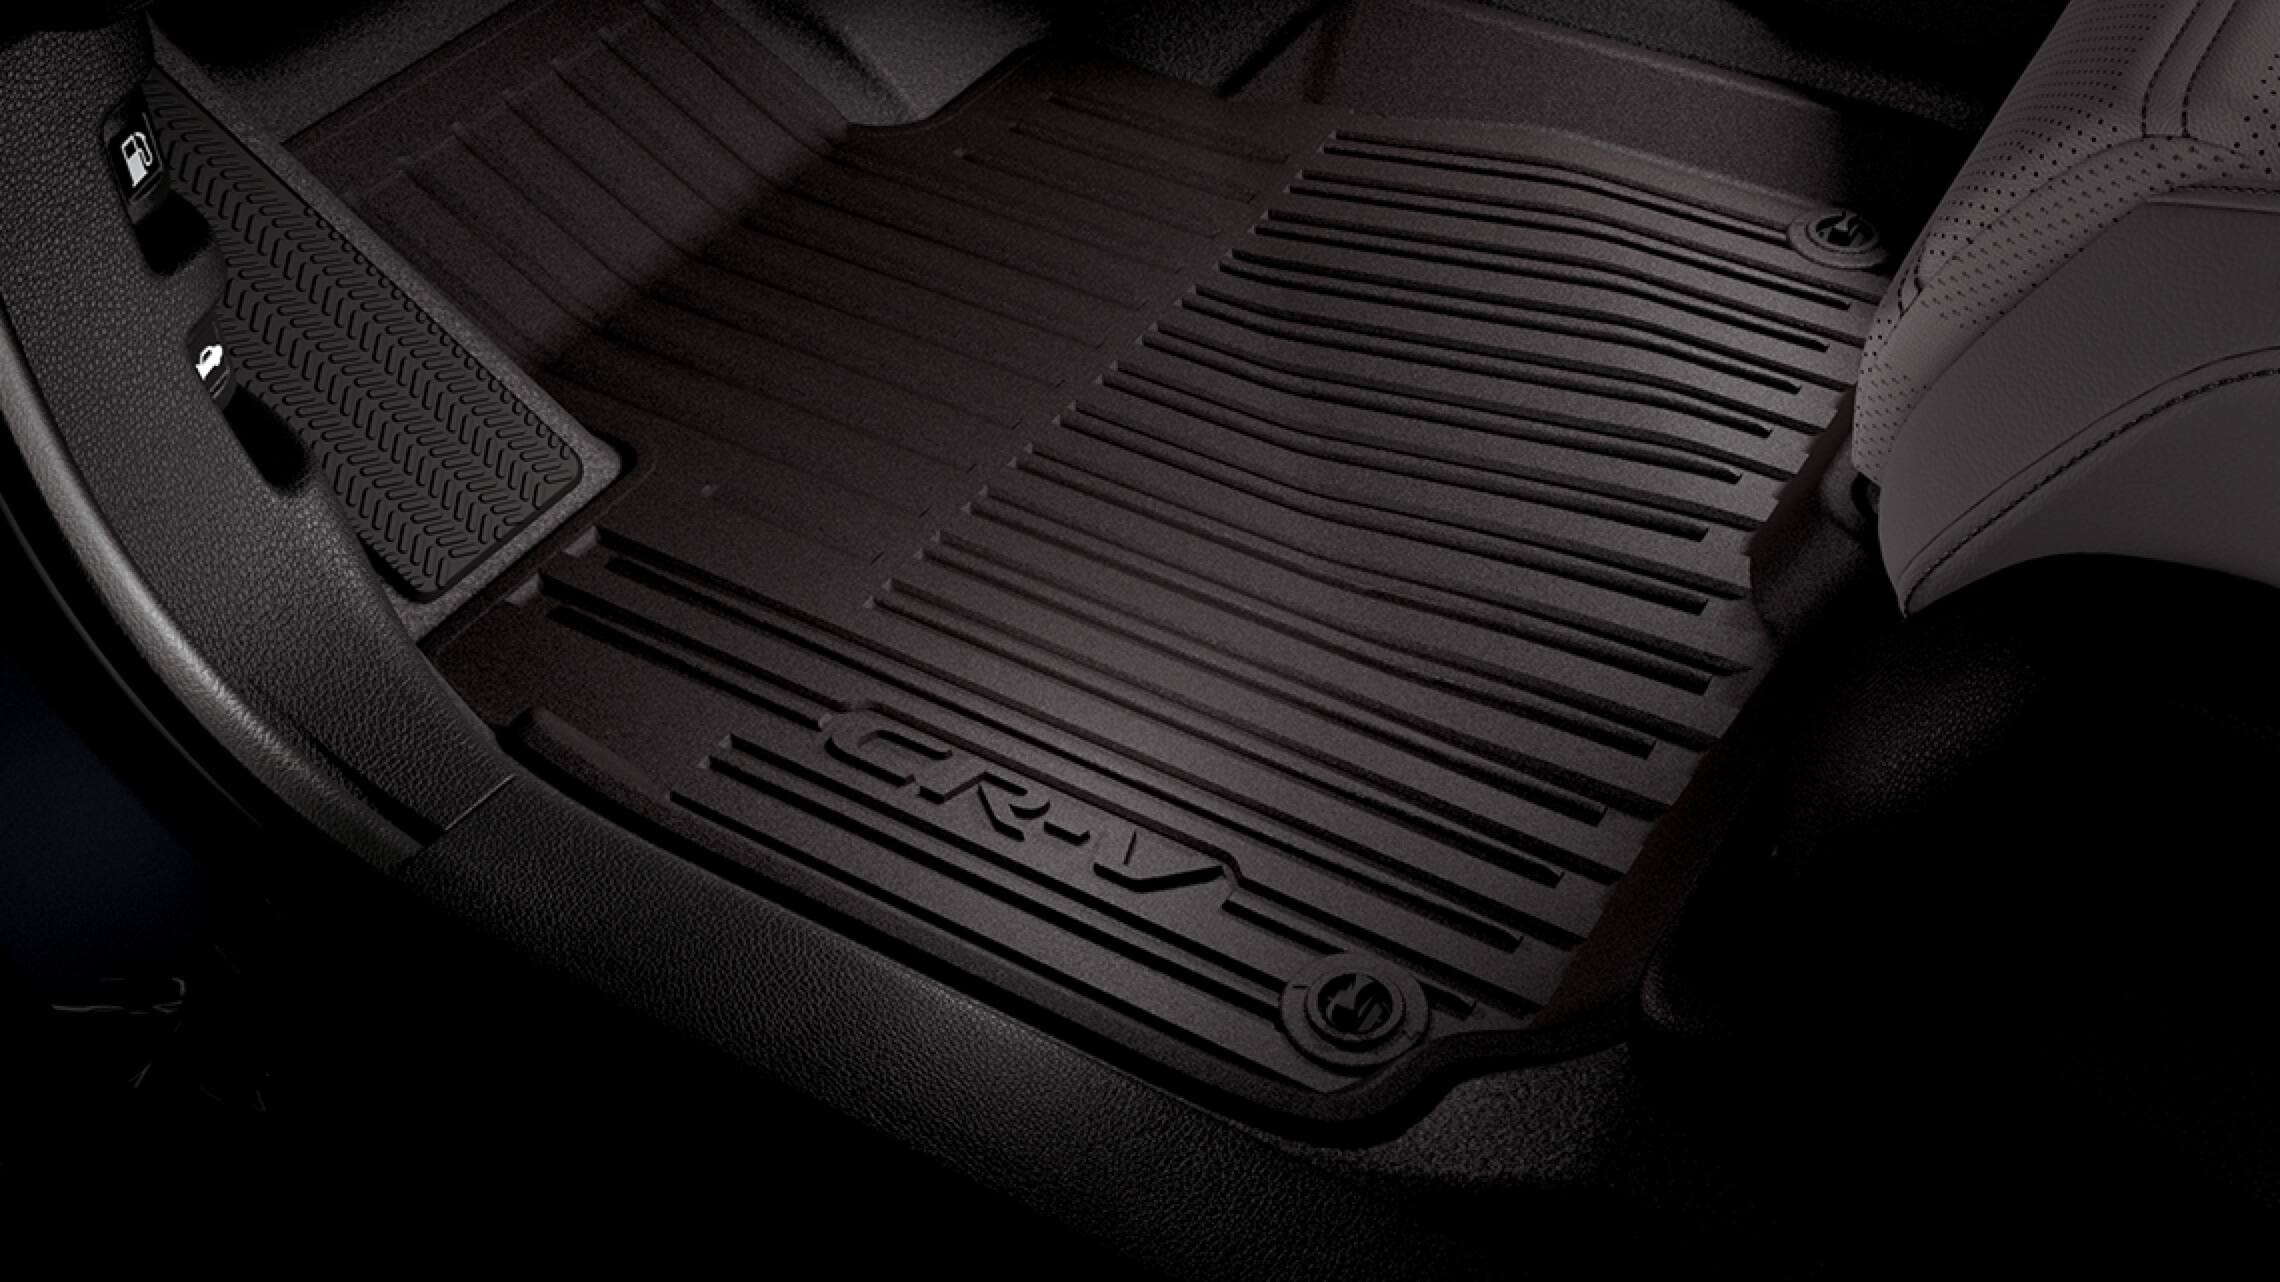 2019 Honda CR-V interior with Honda Genuine Accessory floor mats.